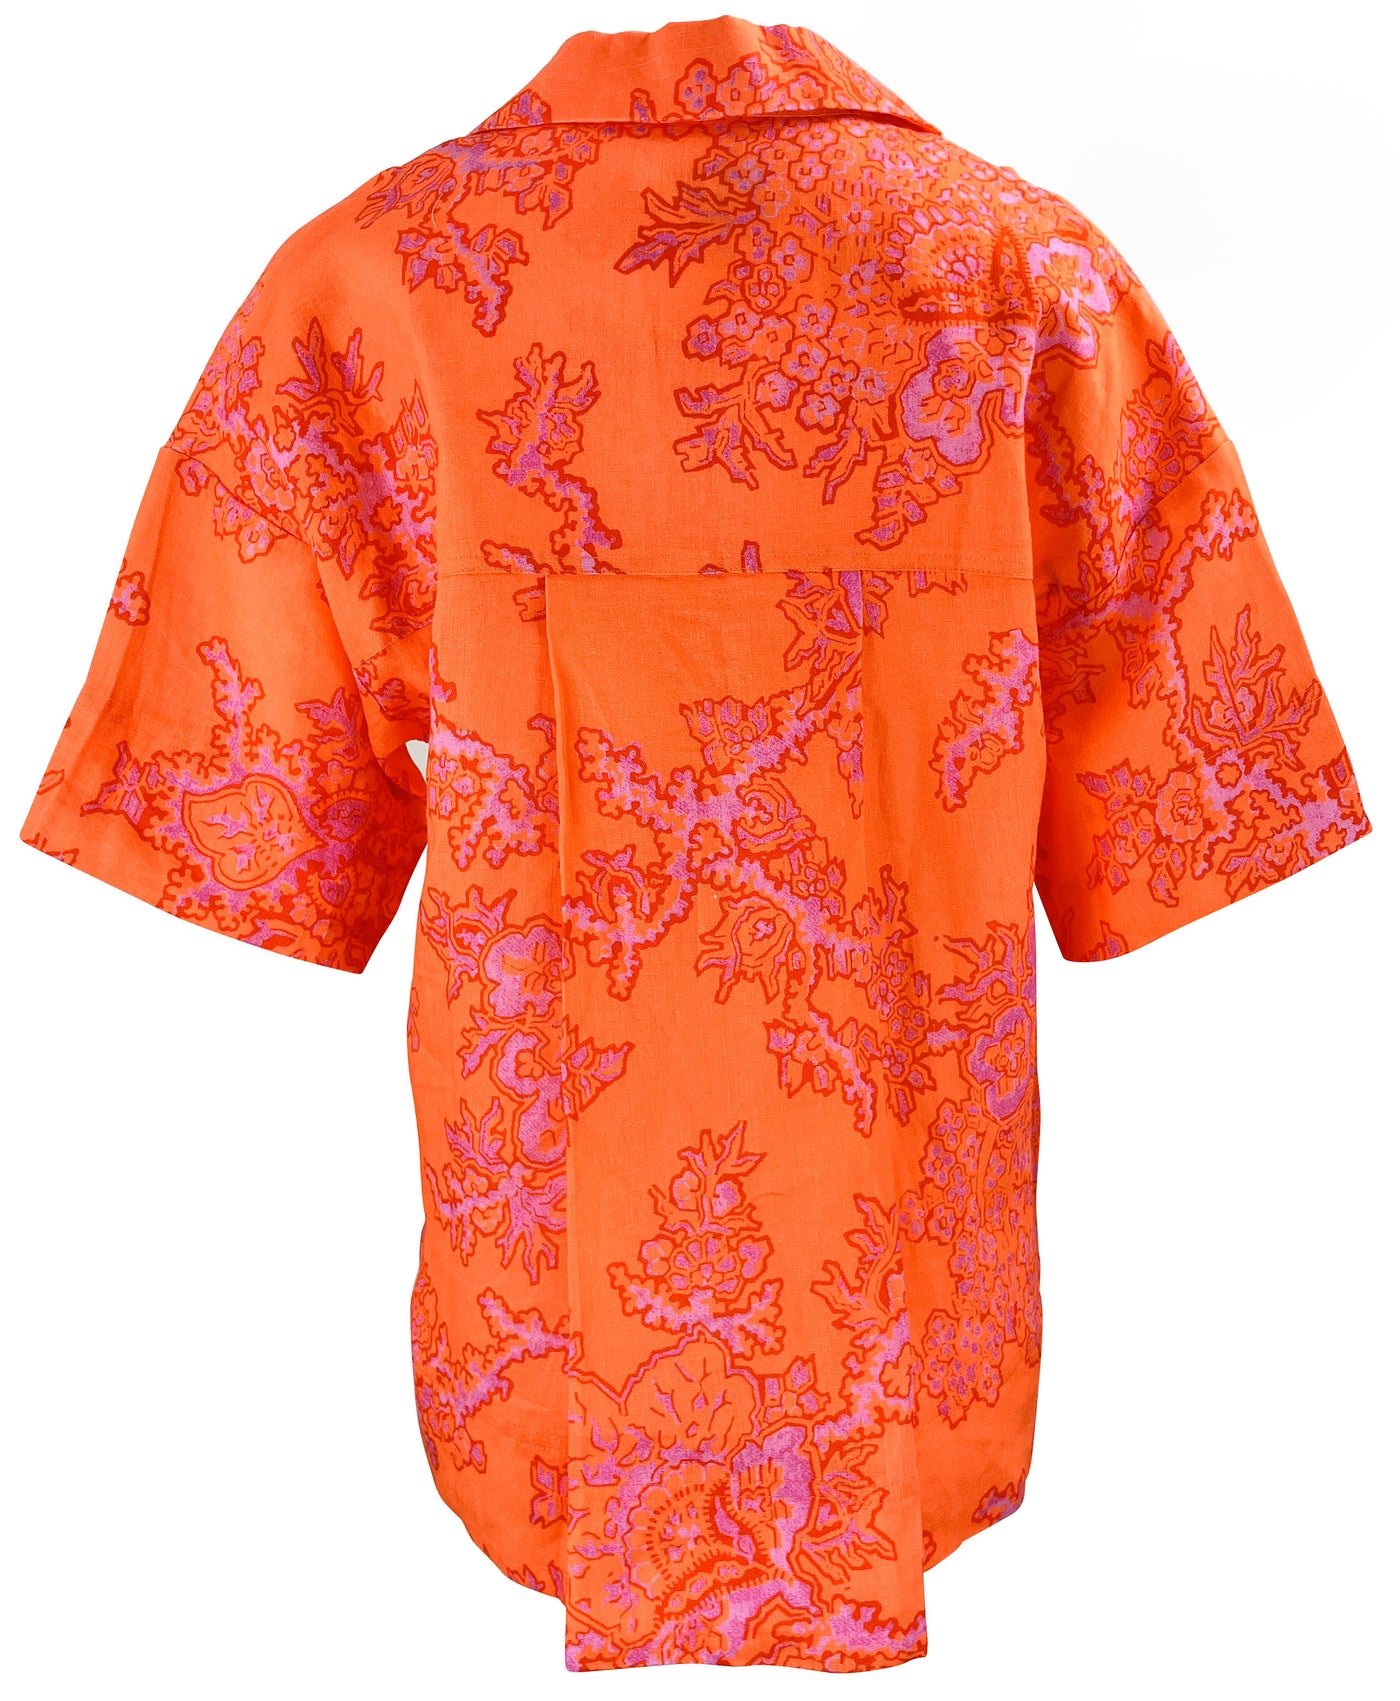 Rhode Kamala Shirt in Coral Reef Grande - Discounts on Rhode at UAL